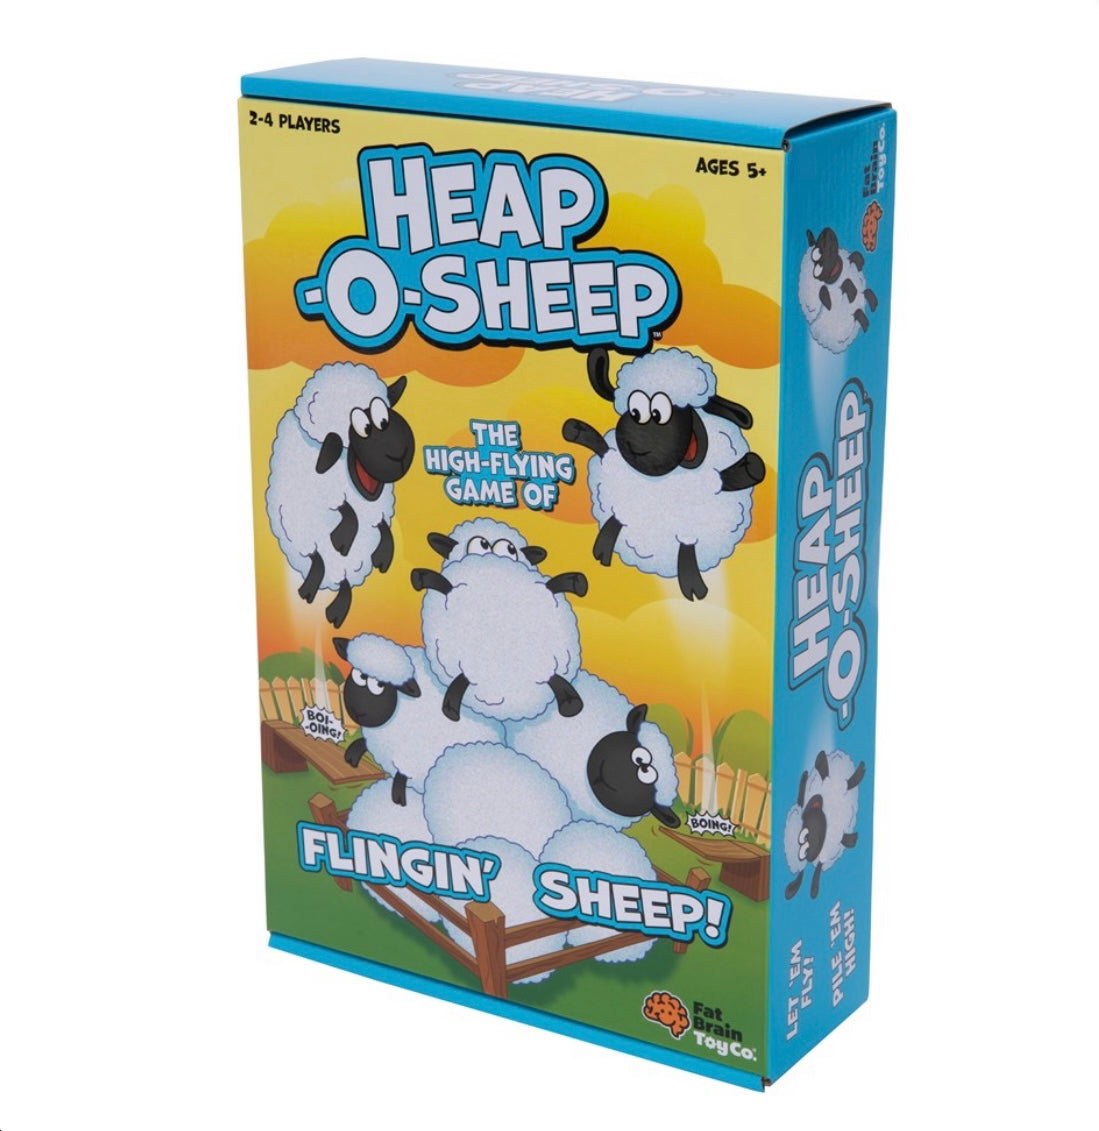 Heap of sheep